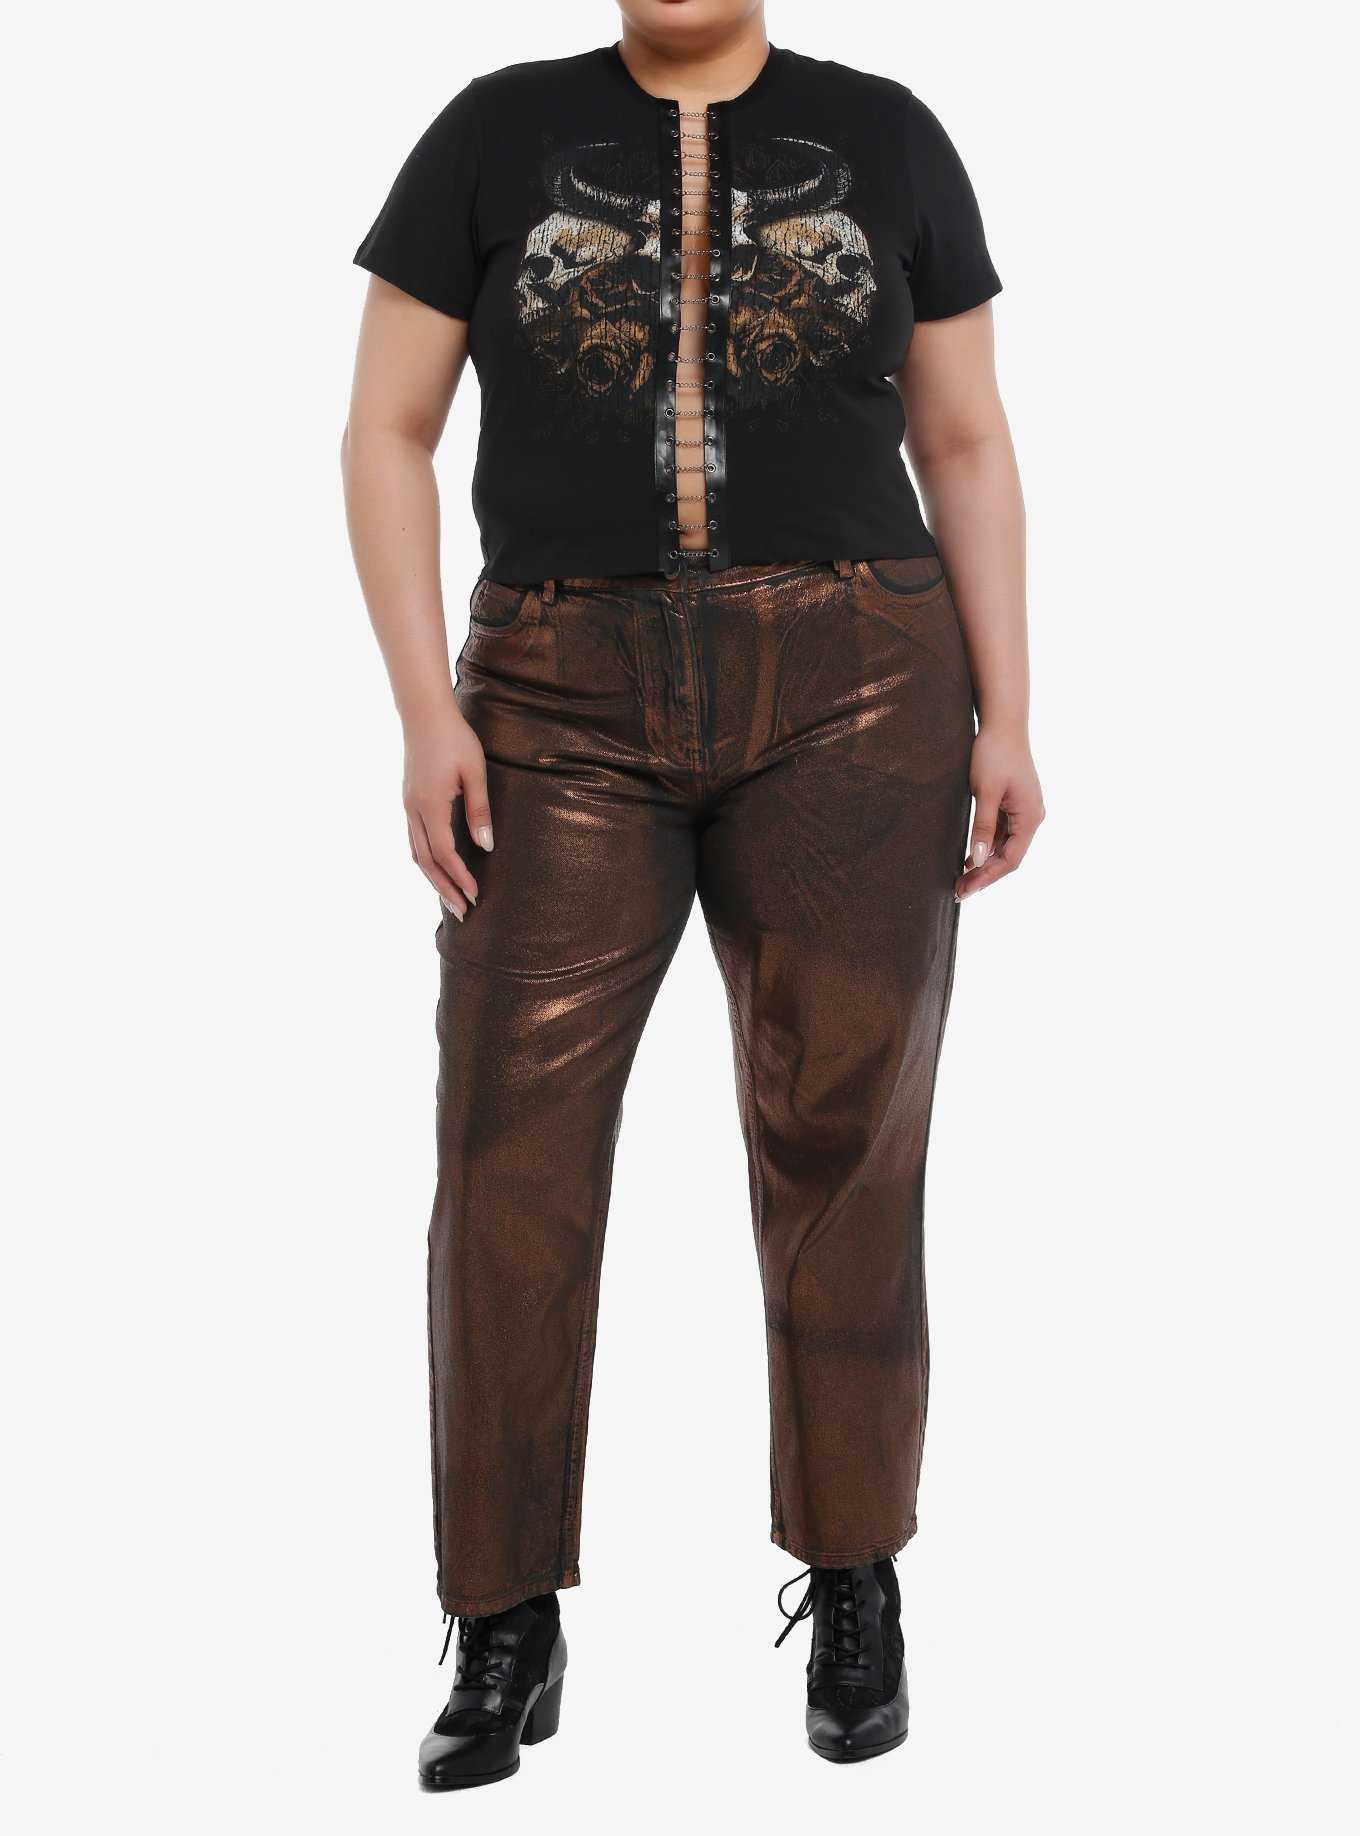 Cosmic Aura Skull & Rose Chains Girls Crop T-Shirt Plus Size, , hi-res